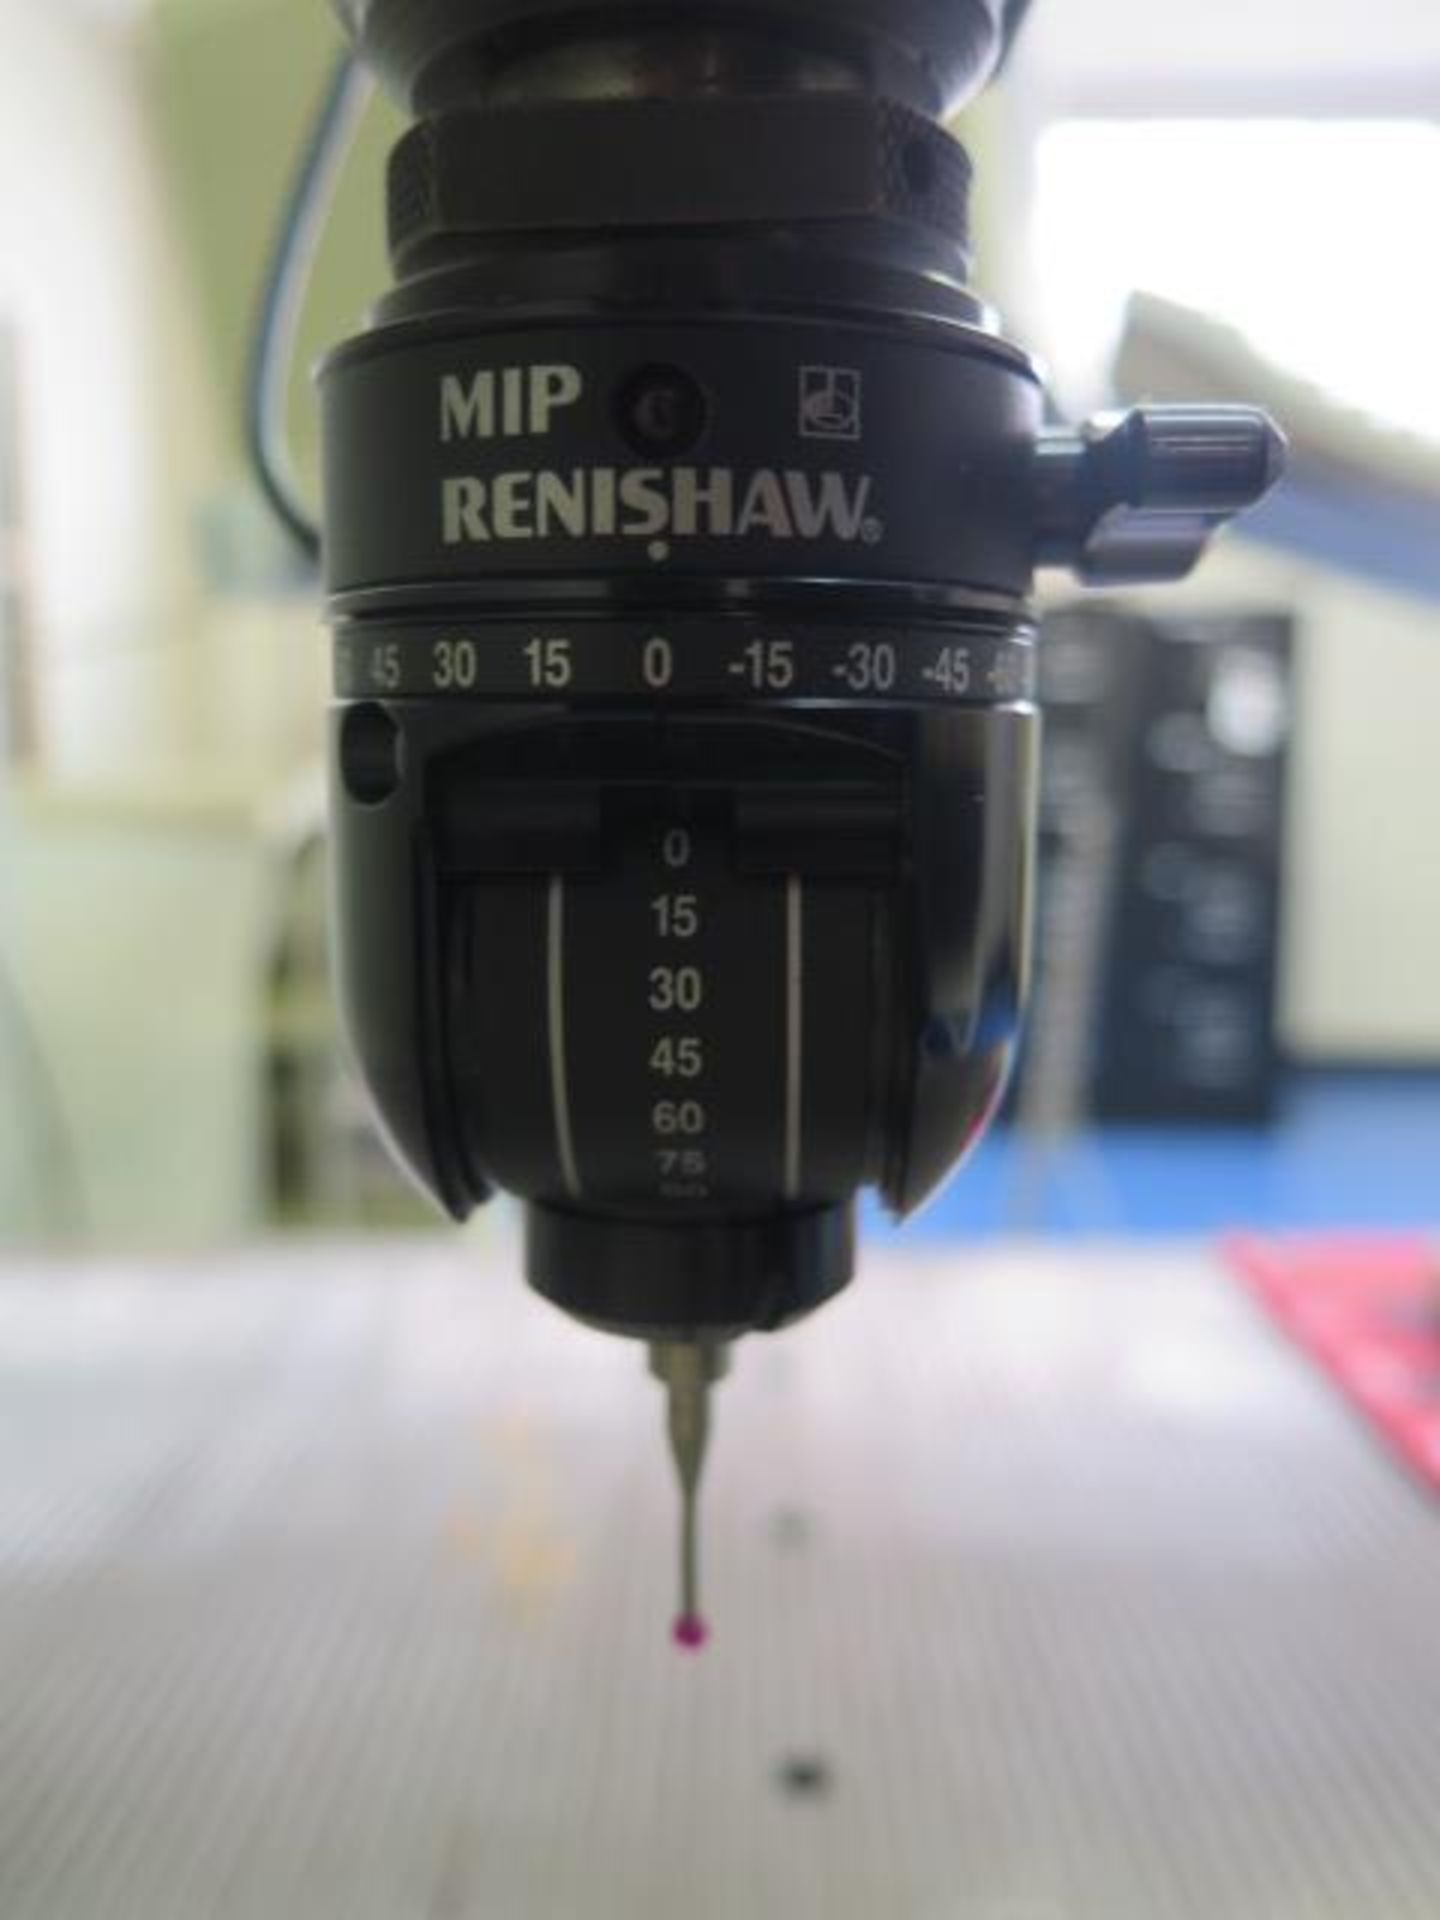 Bendix Cordax 1815 Vertical Arm CMM Machine s/n 2-3990-0882 w/ Renishaw MIP Probe Head, SOLD AS IS - Image 8 of 12